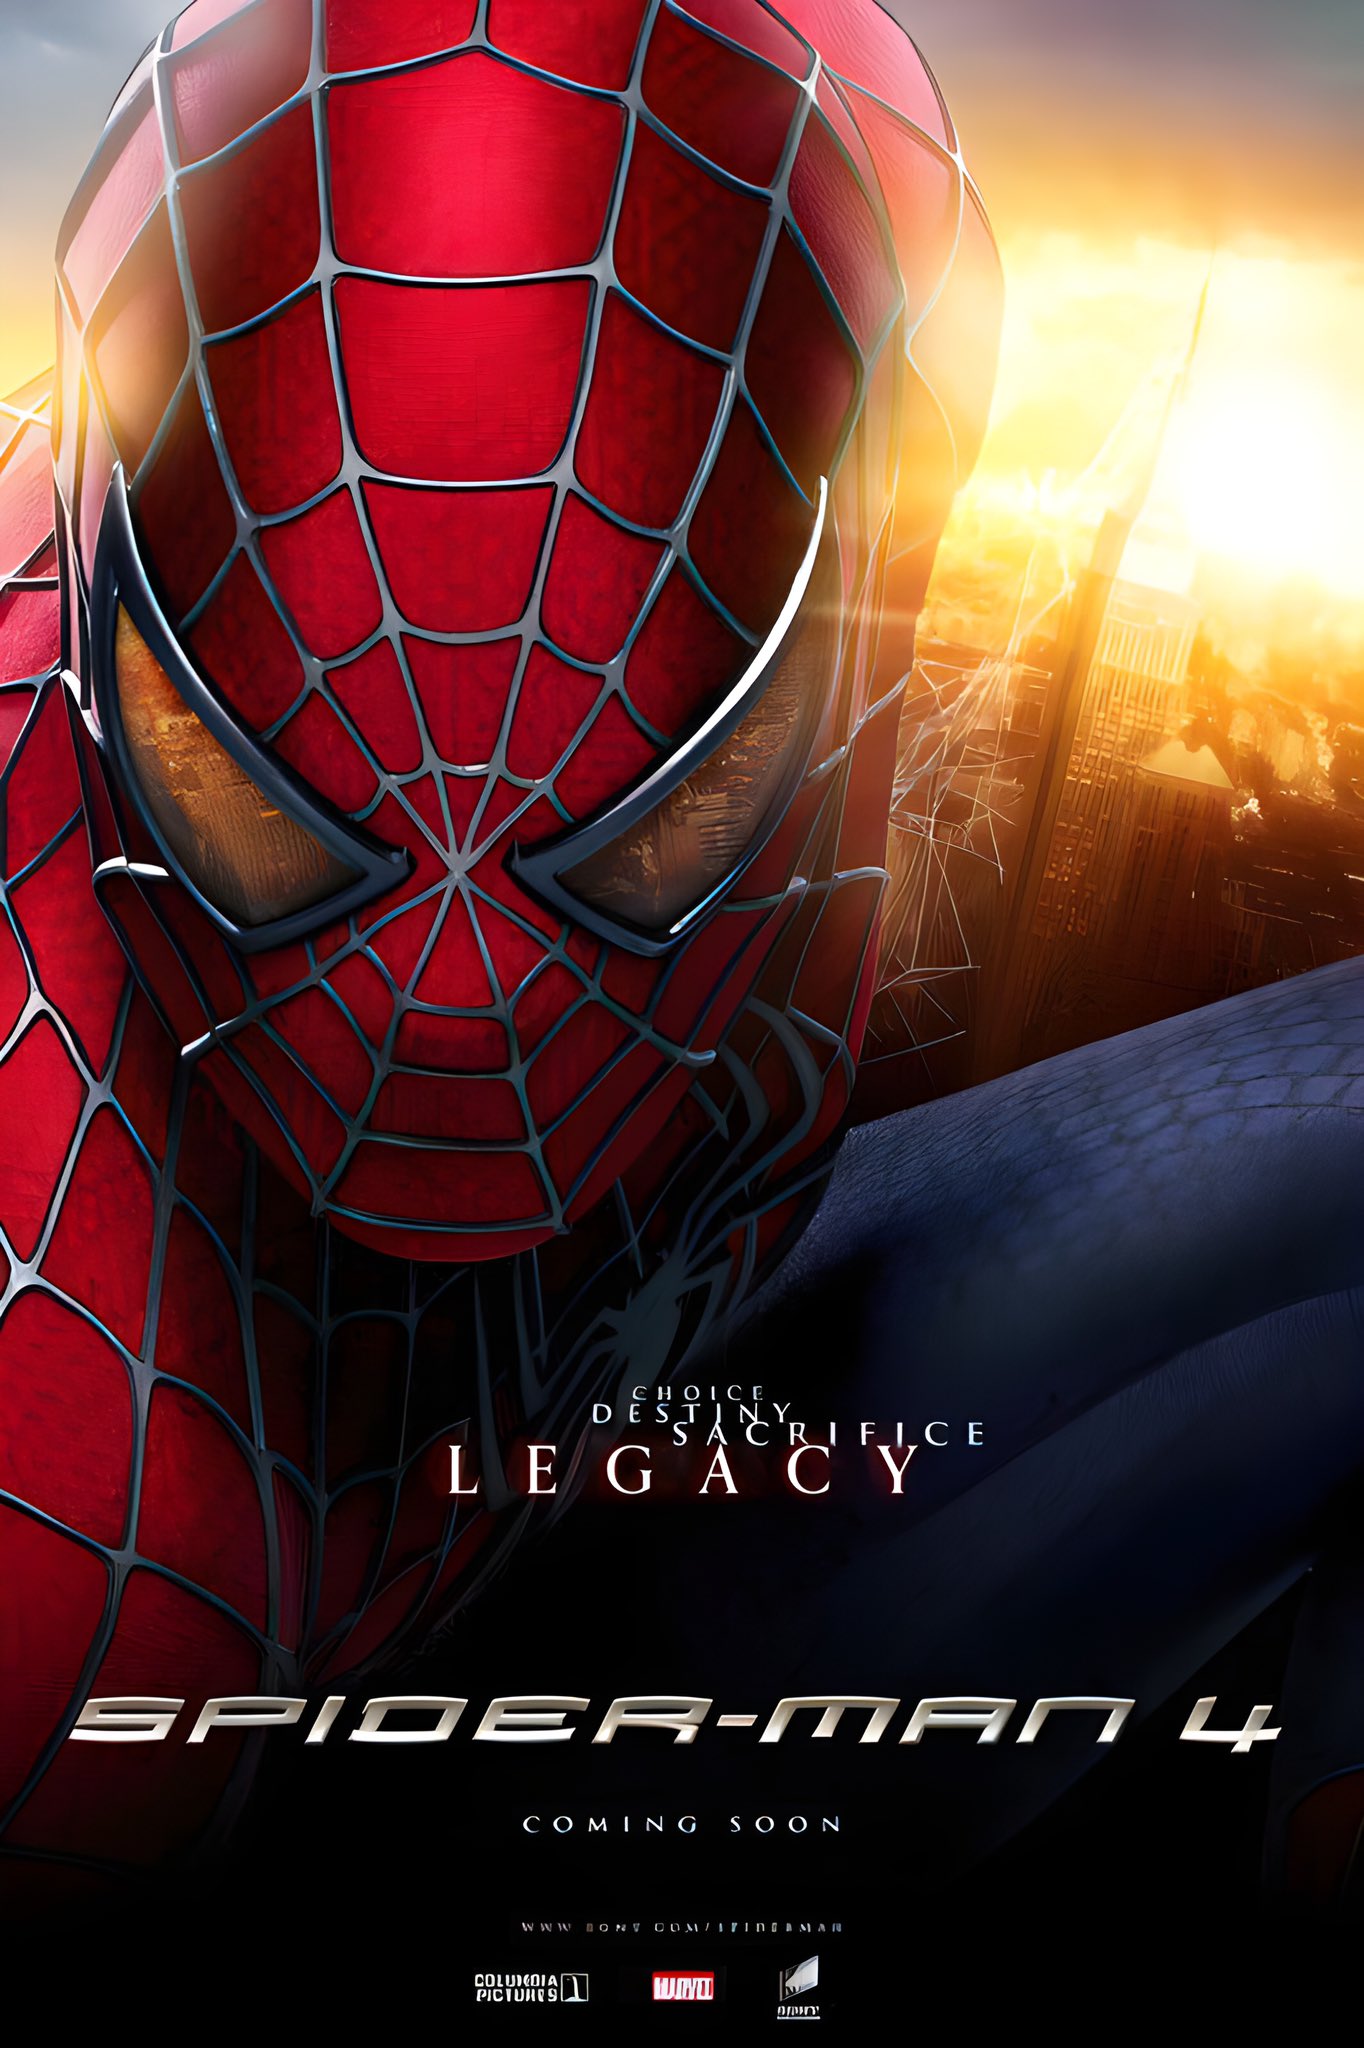 Spiderman 4 Movie Trailer Official